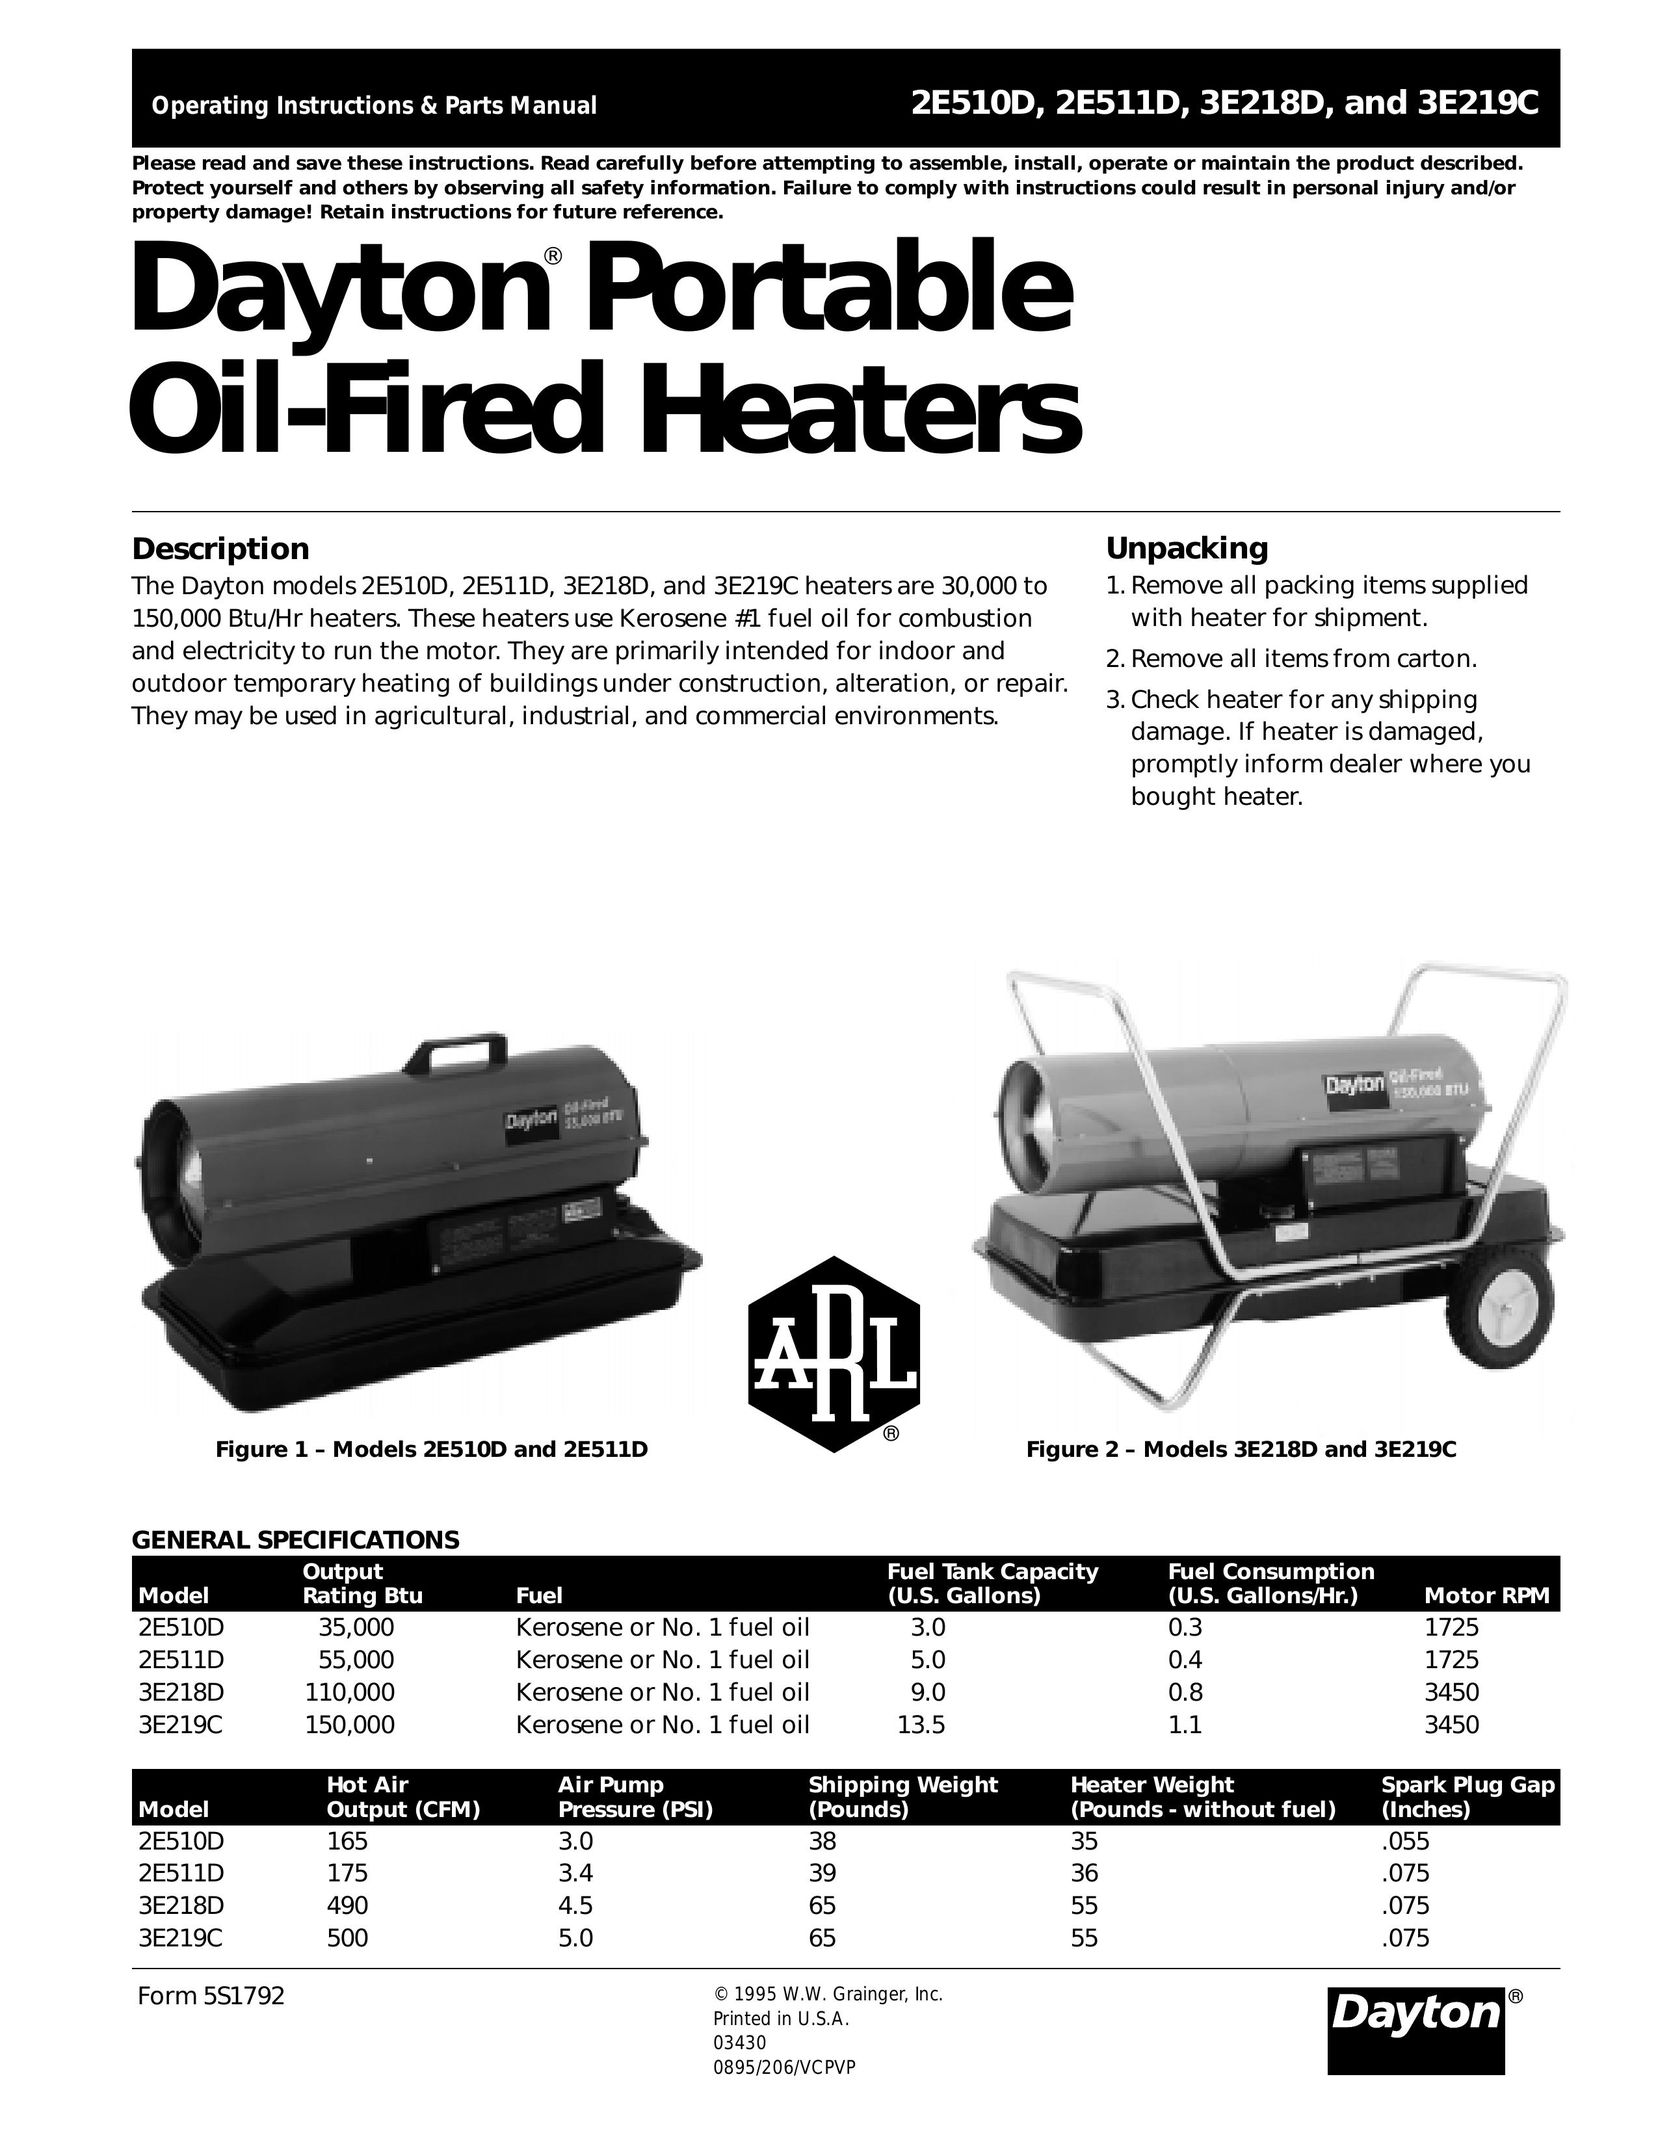 Dayton 3E219C Electric Heater User Manual